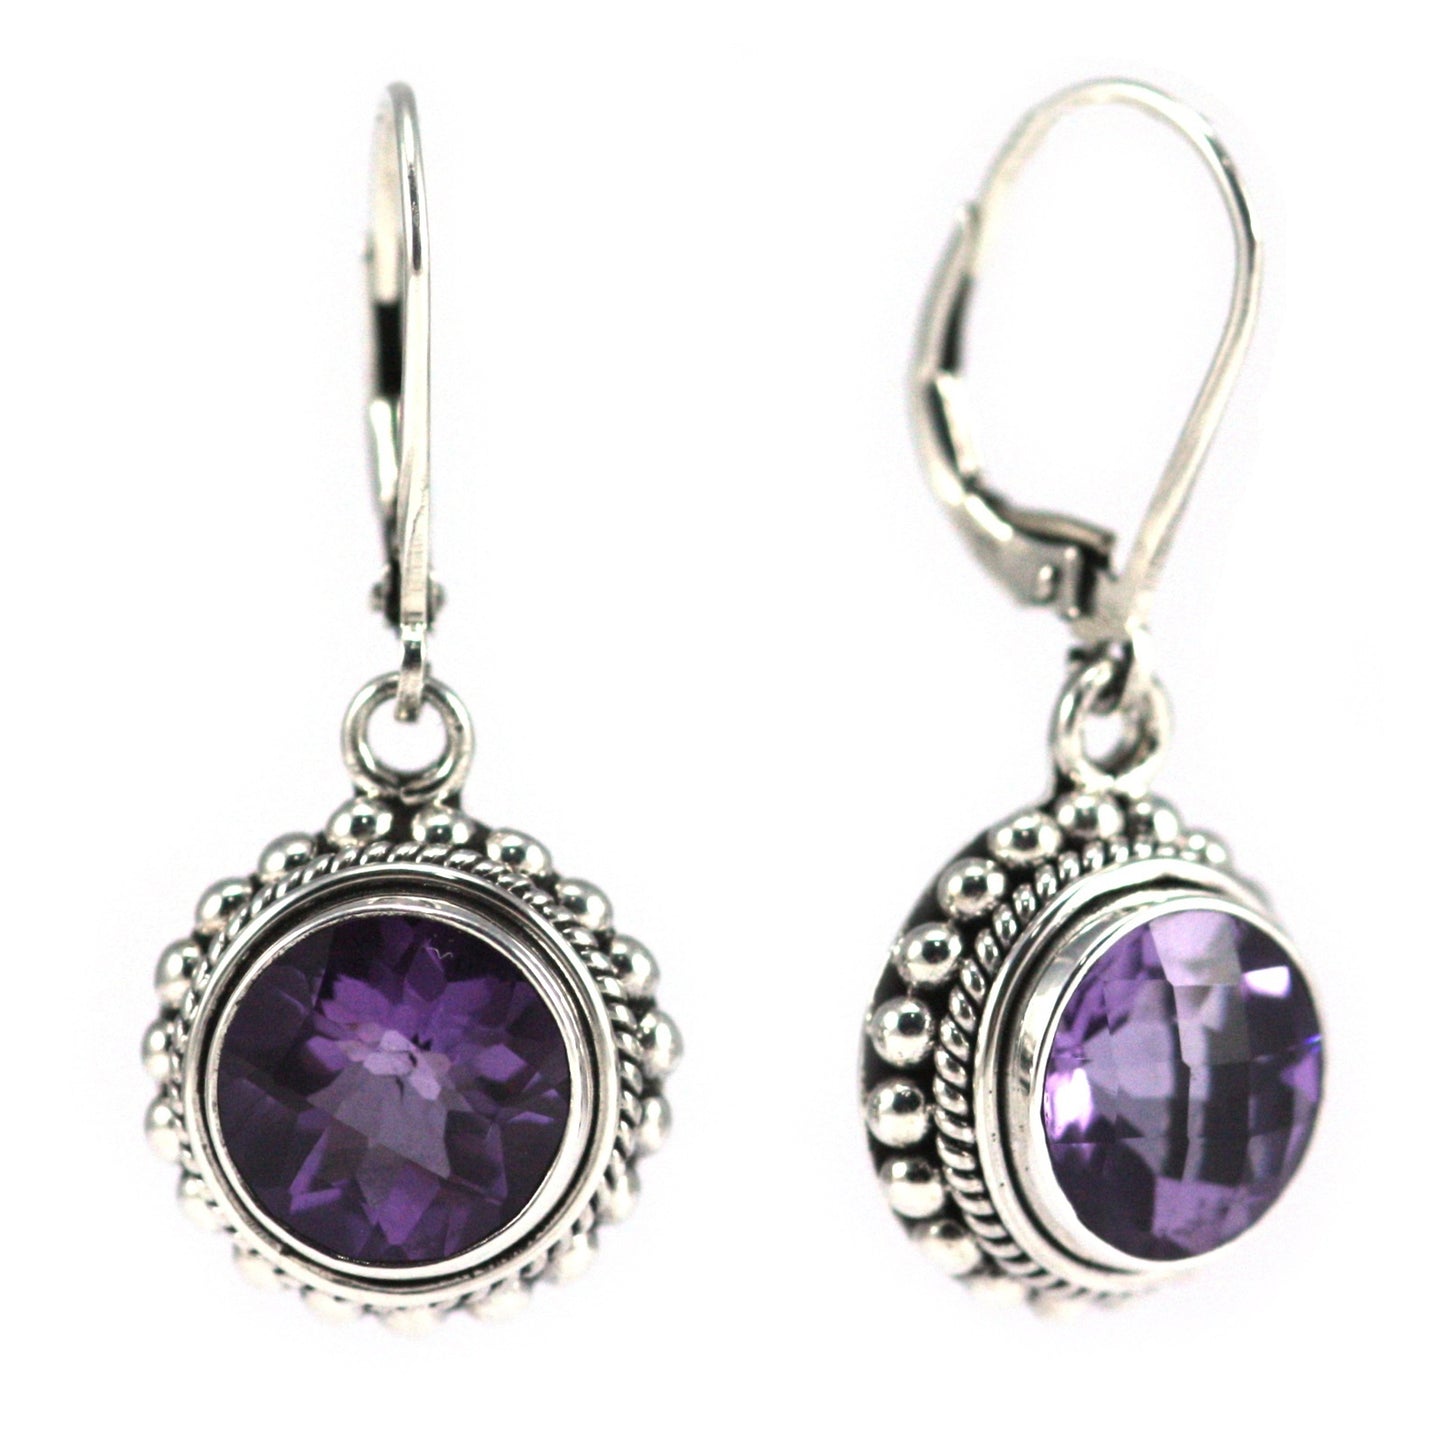 Silver earrings with round purple amethyst gemstones.